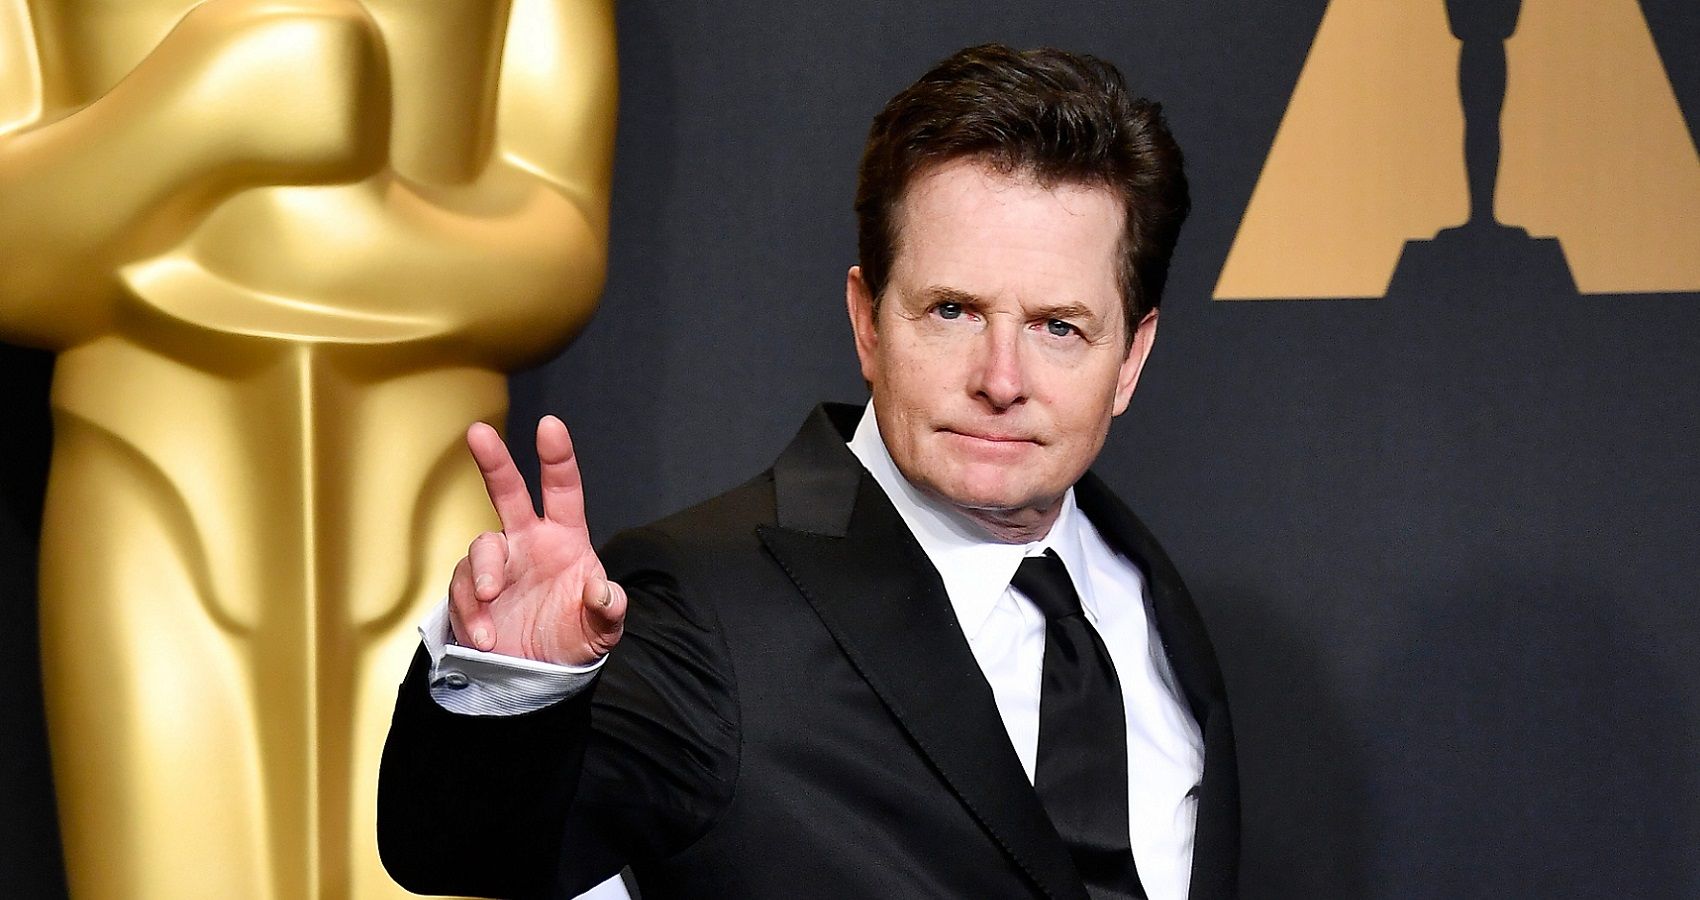 The Hilarious Reason Michael J. Fox Has Hidden His Real Name